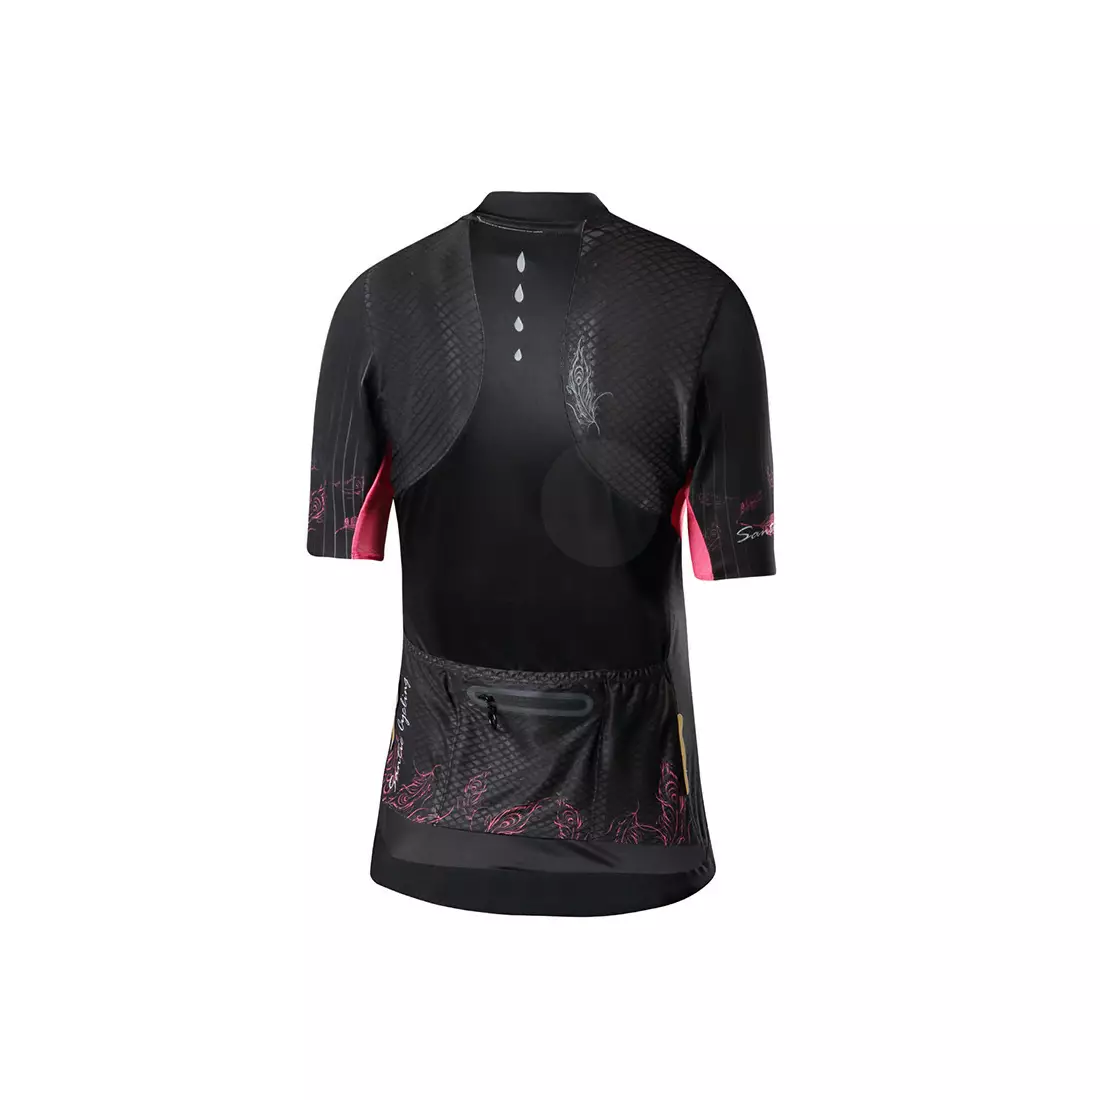 SANTIC women's cycling jersey black L8C02134